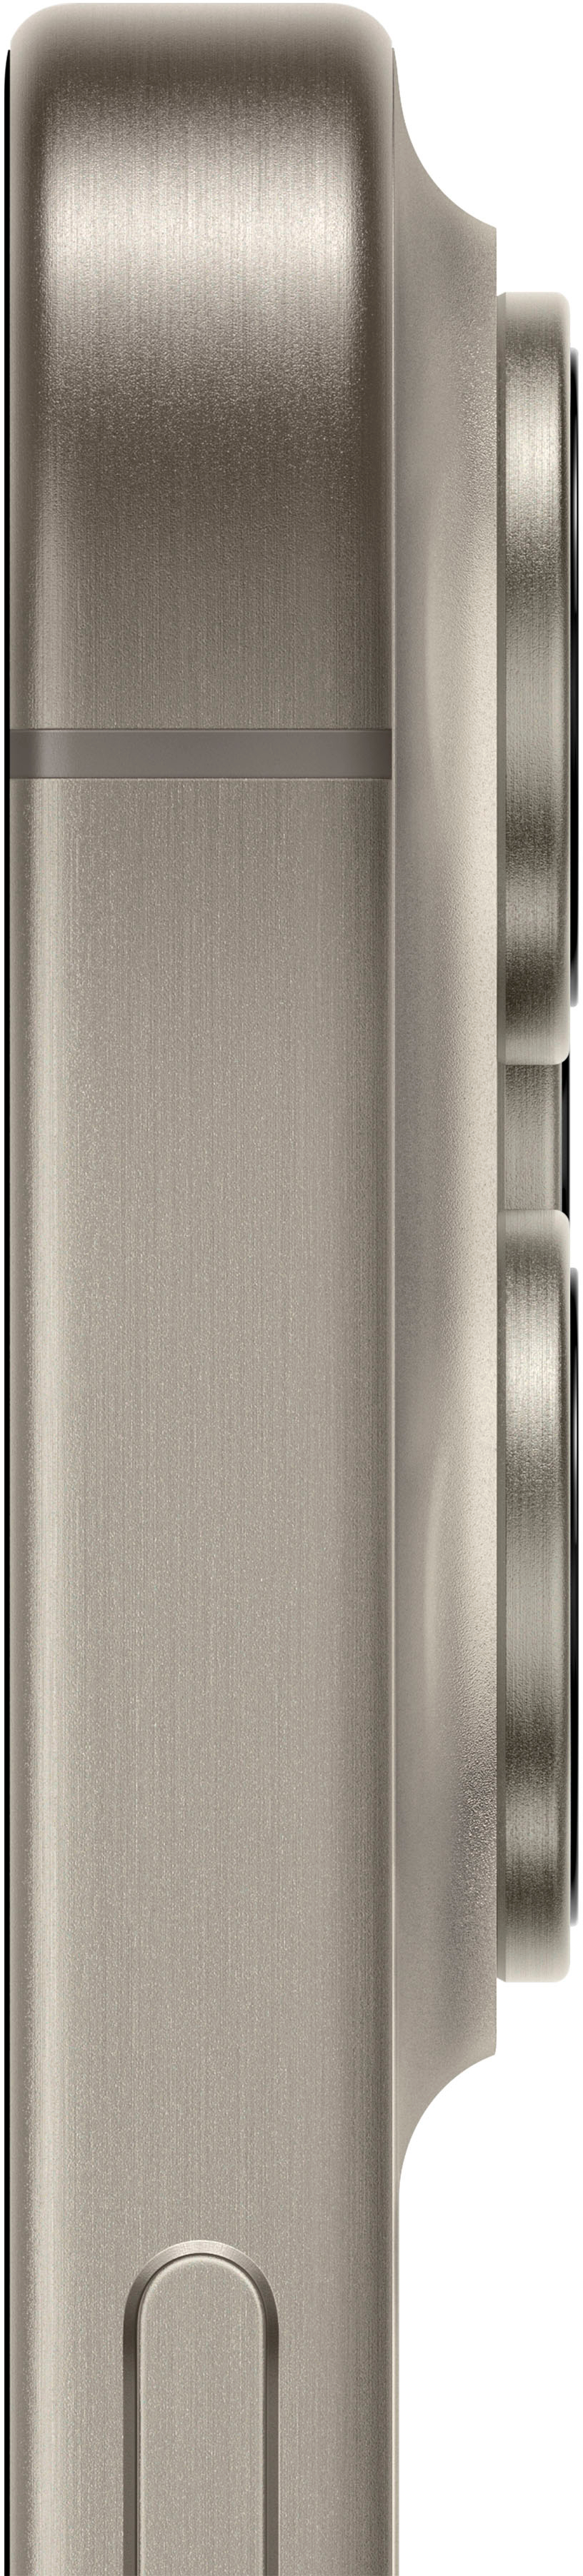 Apple iPhone 15 Pro Max 512GB Natural Titanium (AT&T) MU6D3LL/A - Best Buy